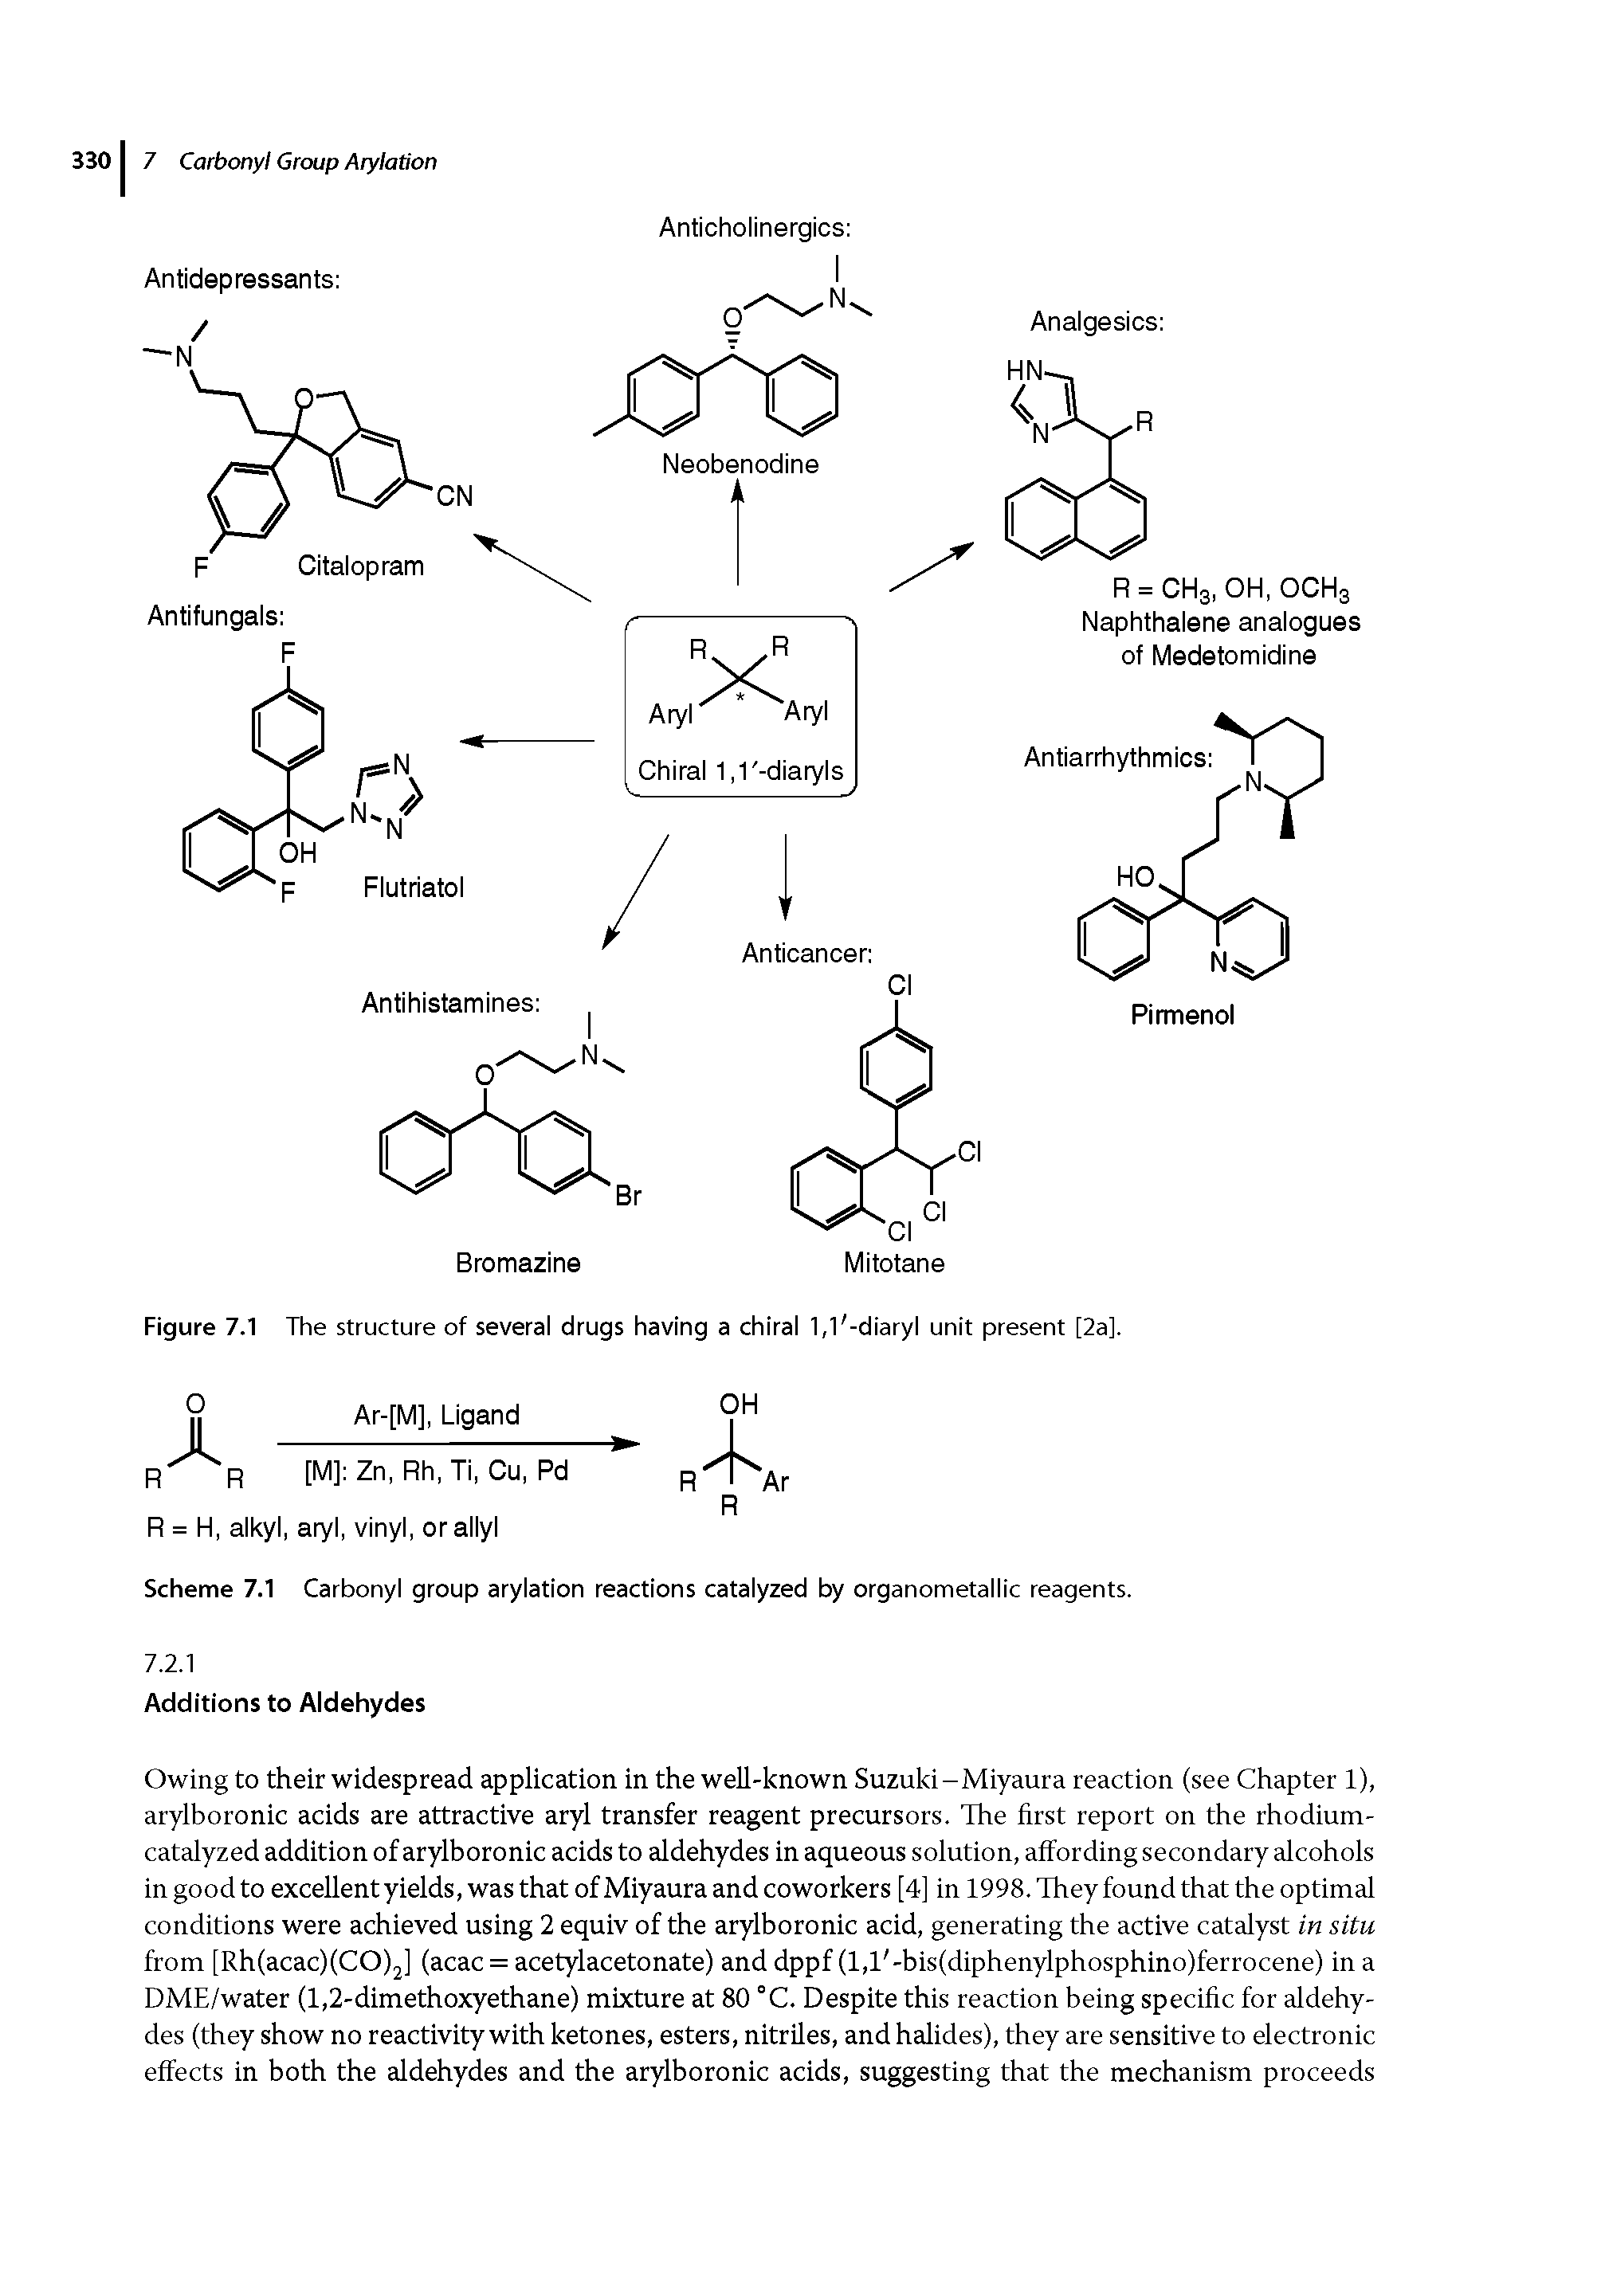 Scheme 7.1 Carbonyl group arylation reactions catalyzed by organometallic reagents.